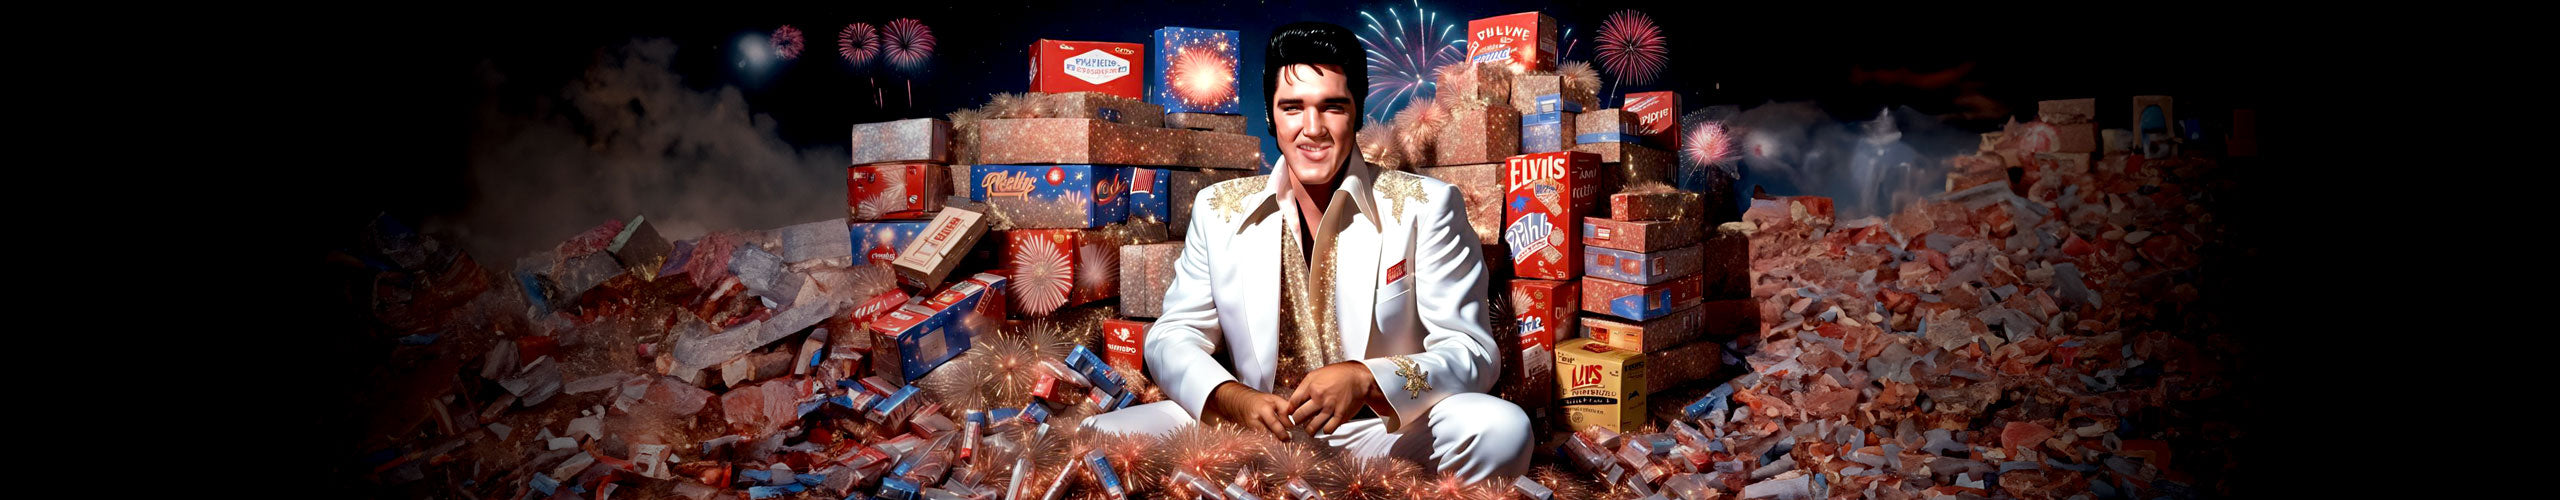 Elvis Presley's Explosive Love for Fireworks